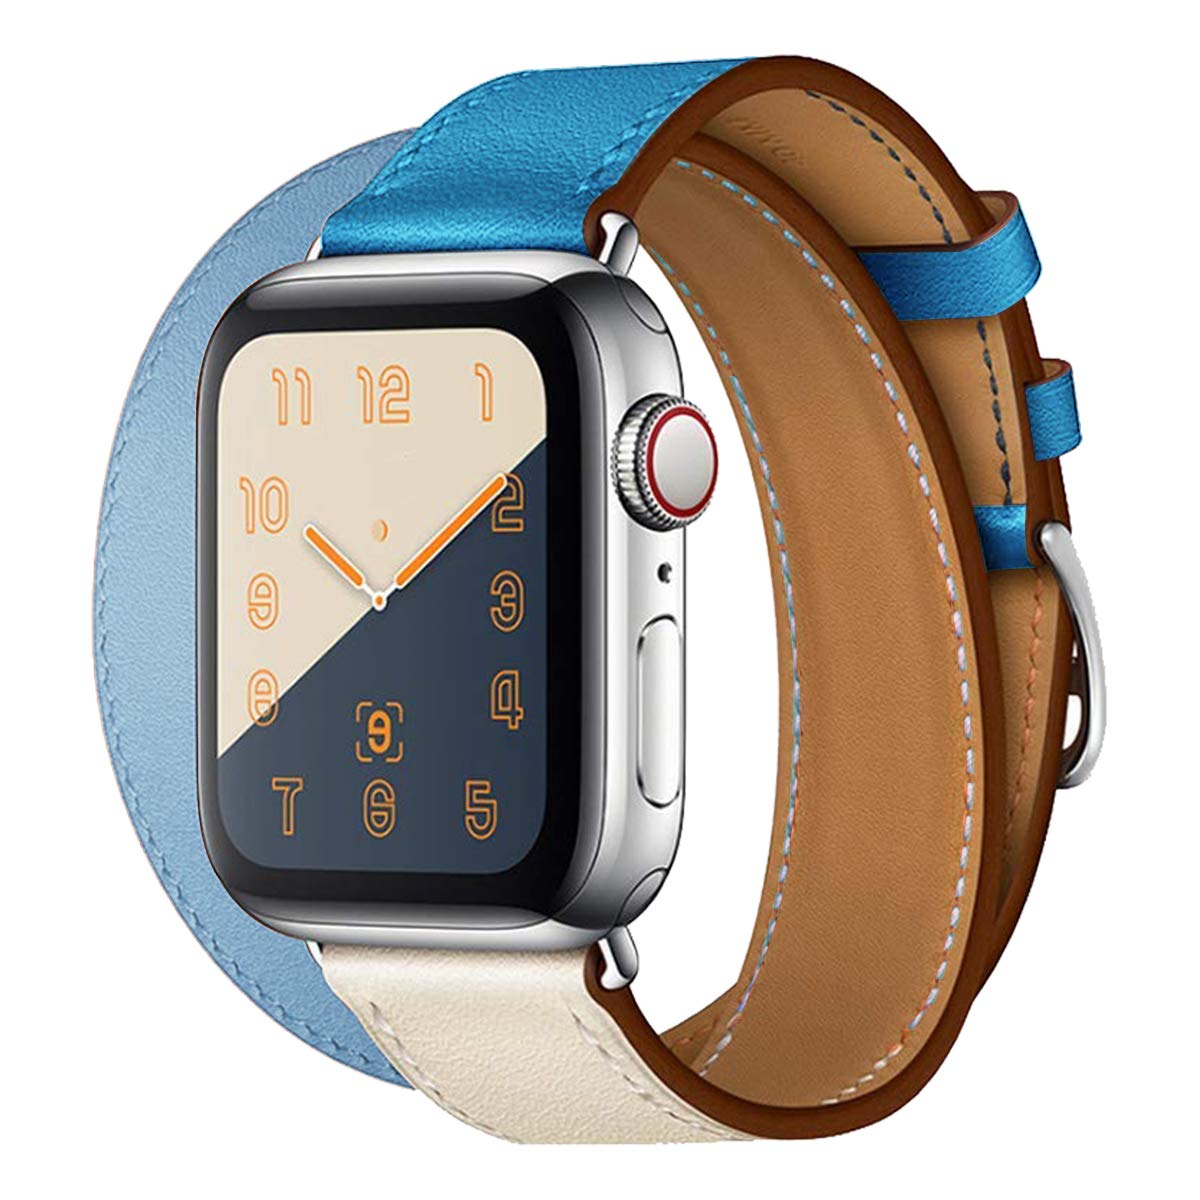 Řemínek iMore Double Tour Apple Watch Series 3/2/1 (42mm) - Béžový/Modrý